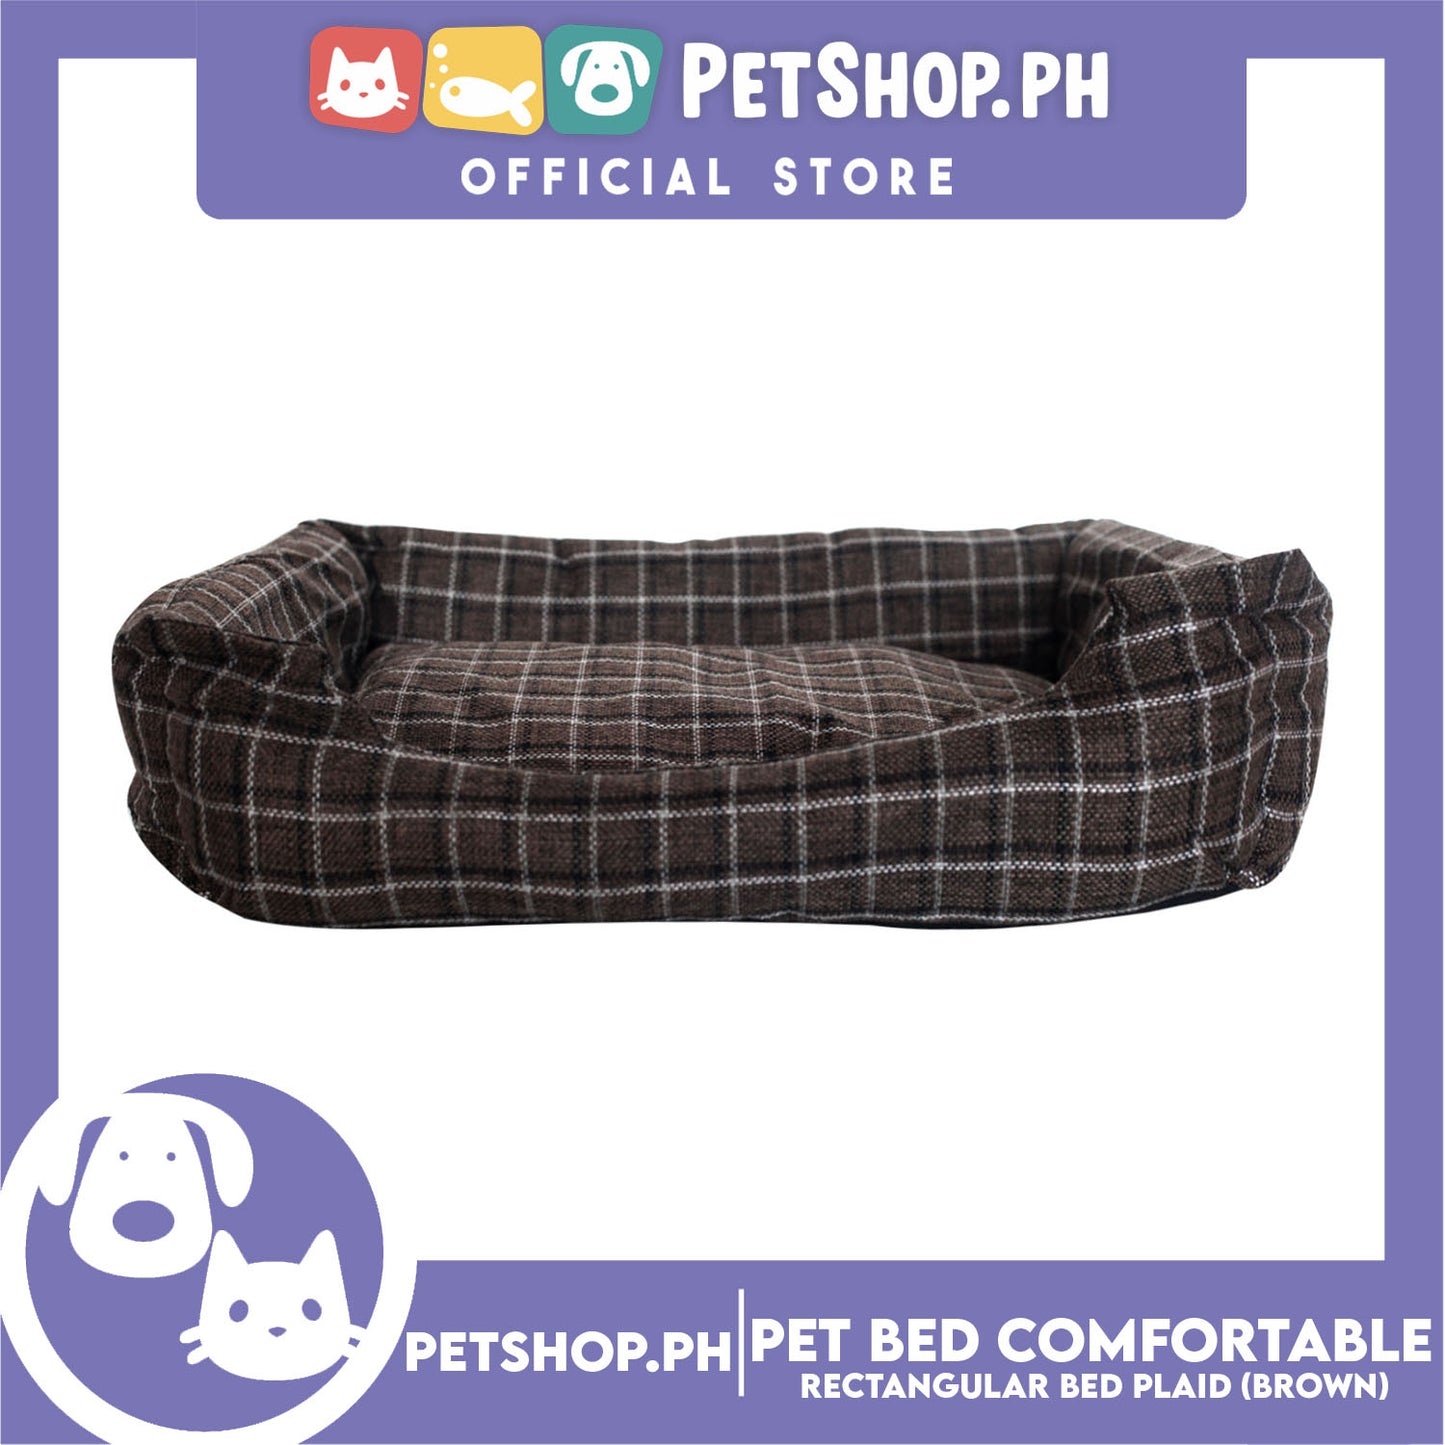 Pet Bed Comfortable Rectangular Pet Bed Plaid Design 50x41x10cm Medium for Dogs & Cats (Brown)